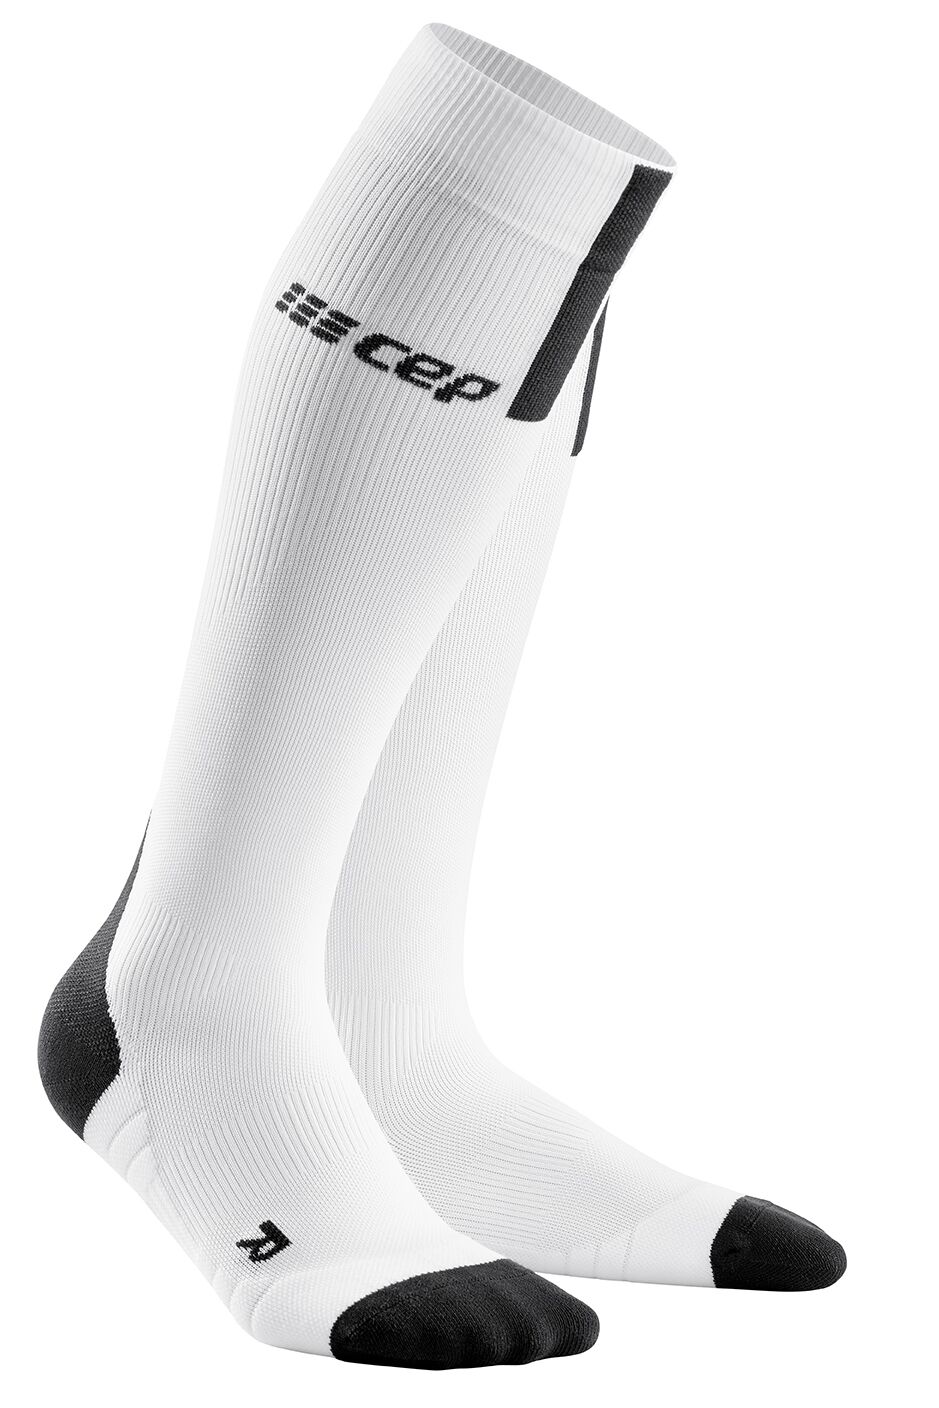 CEP Run 3.0 Compression Tall Socks, White/Black, Women